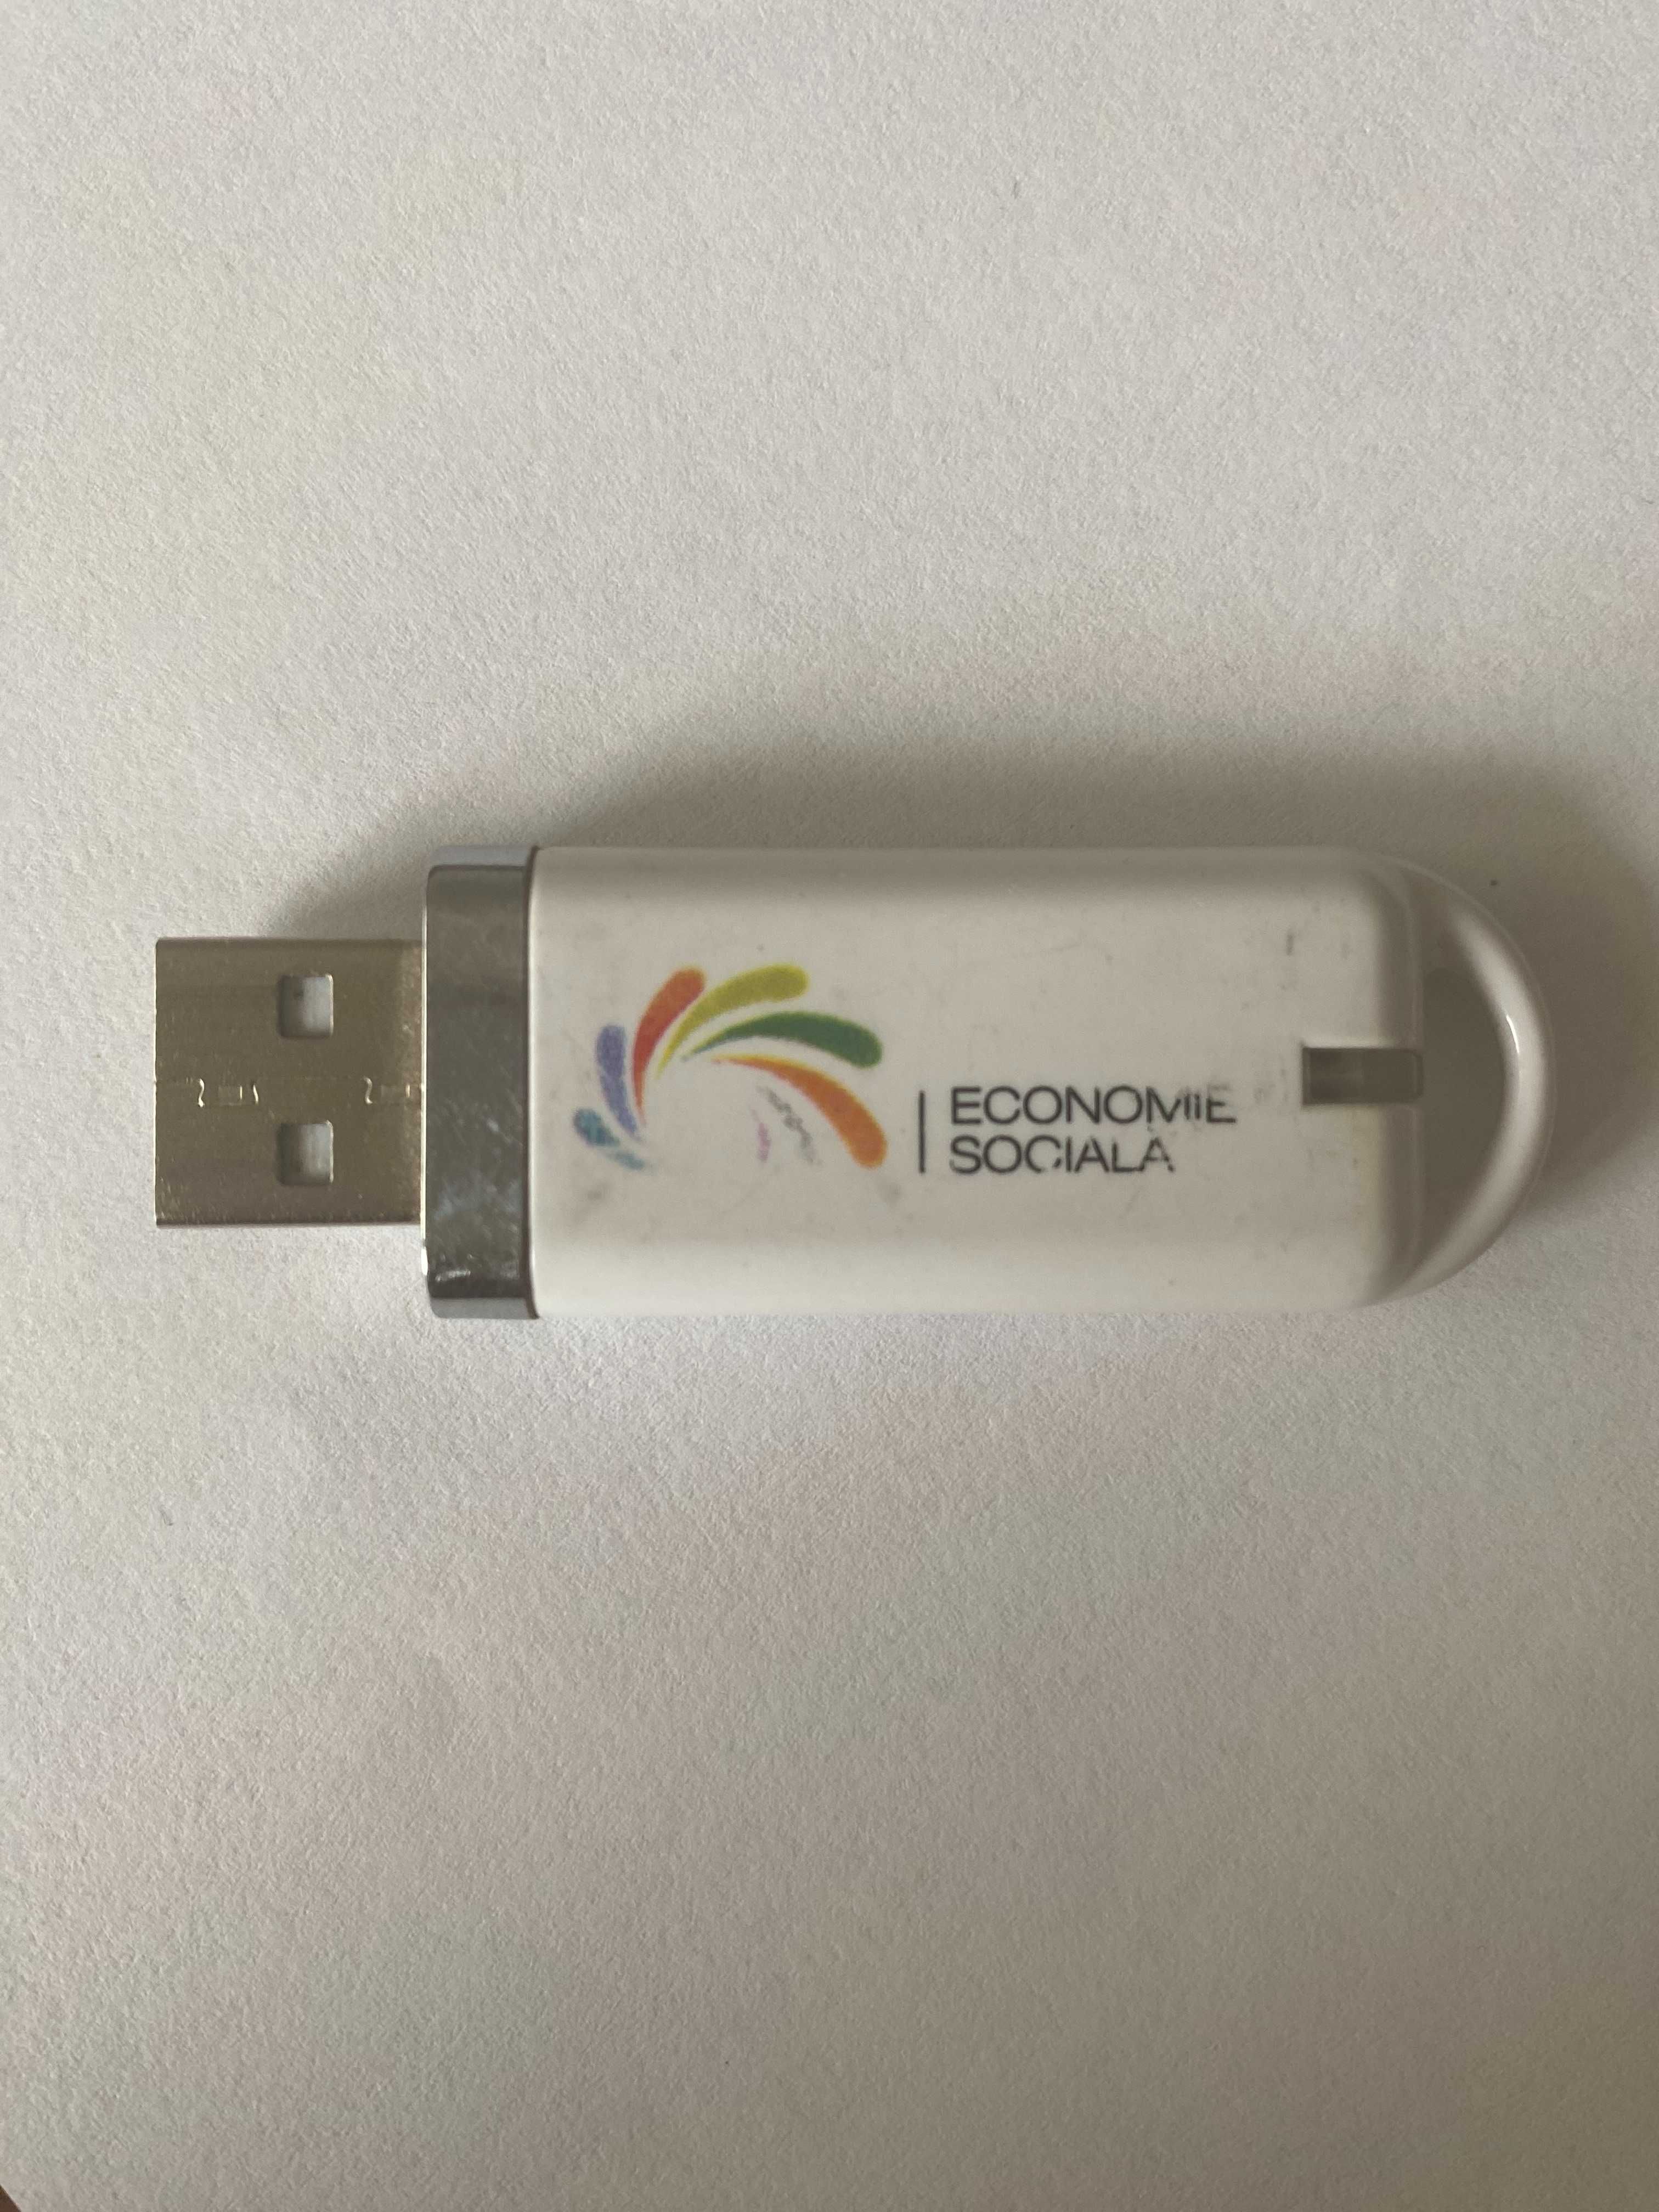 Vand stick de memorie USB - 965 MB - 10 lei